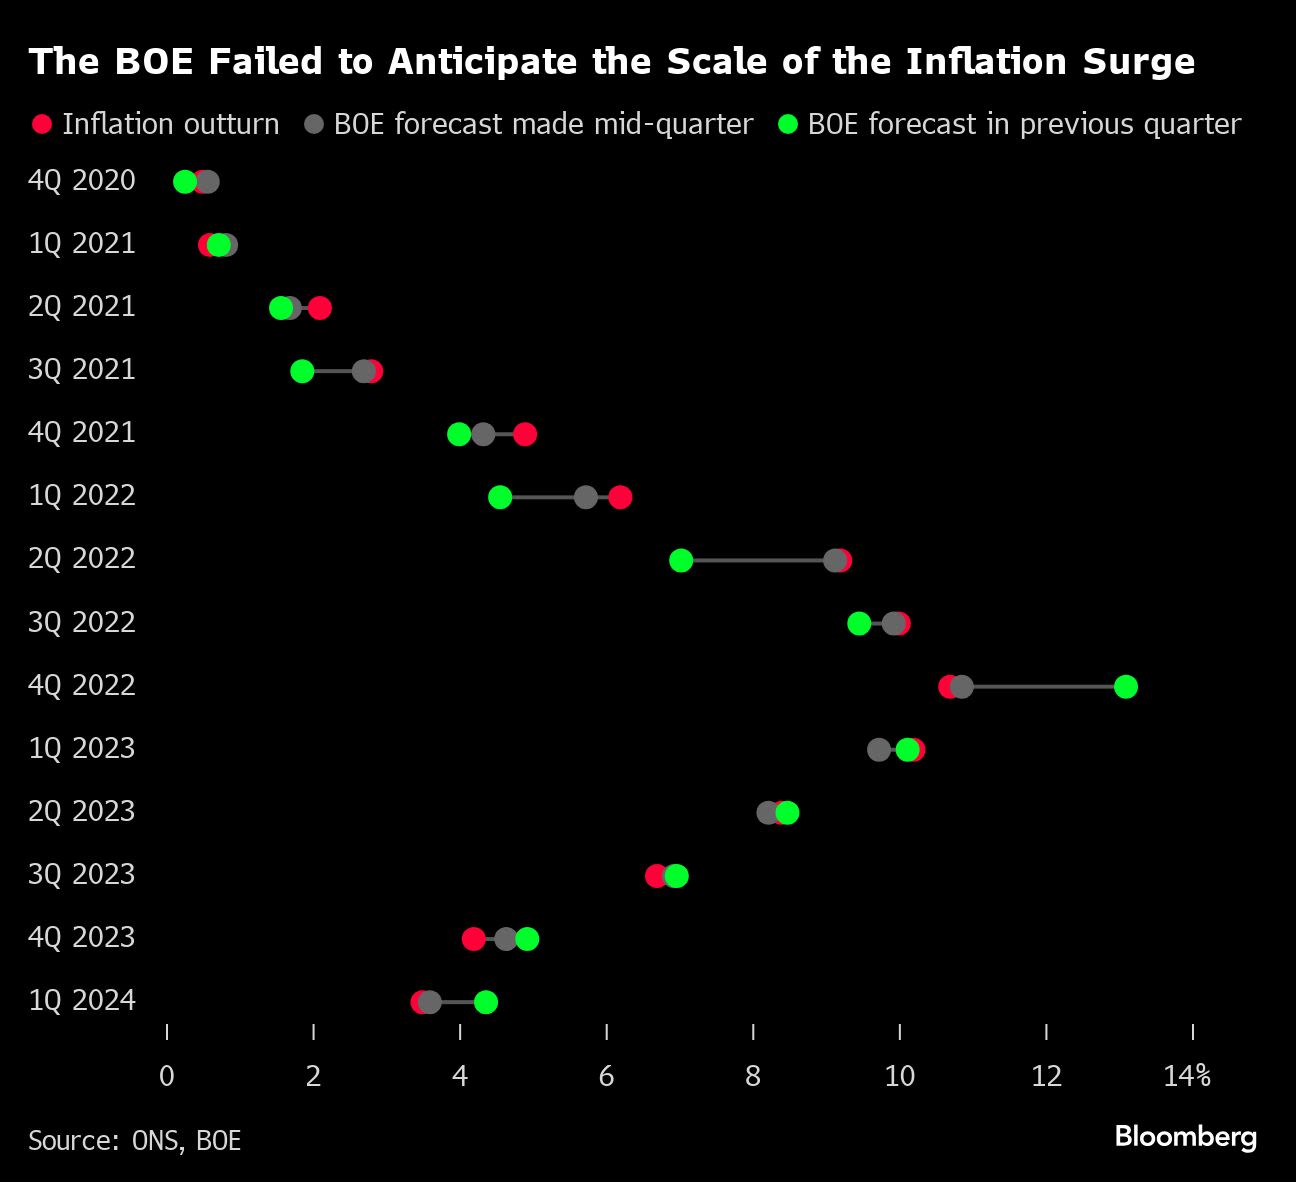 Bernanke Says BOE Has Shown Interest in Idea of Rate Projections